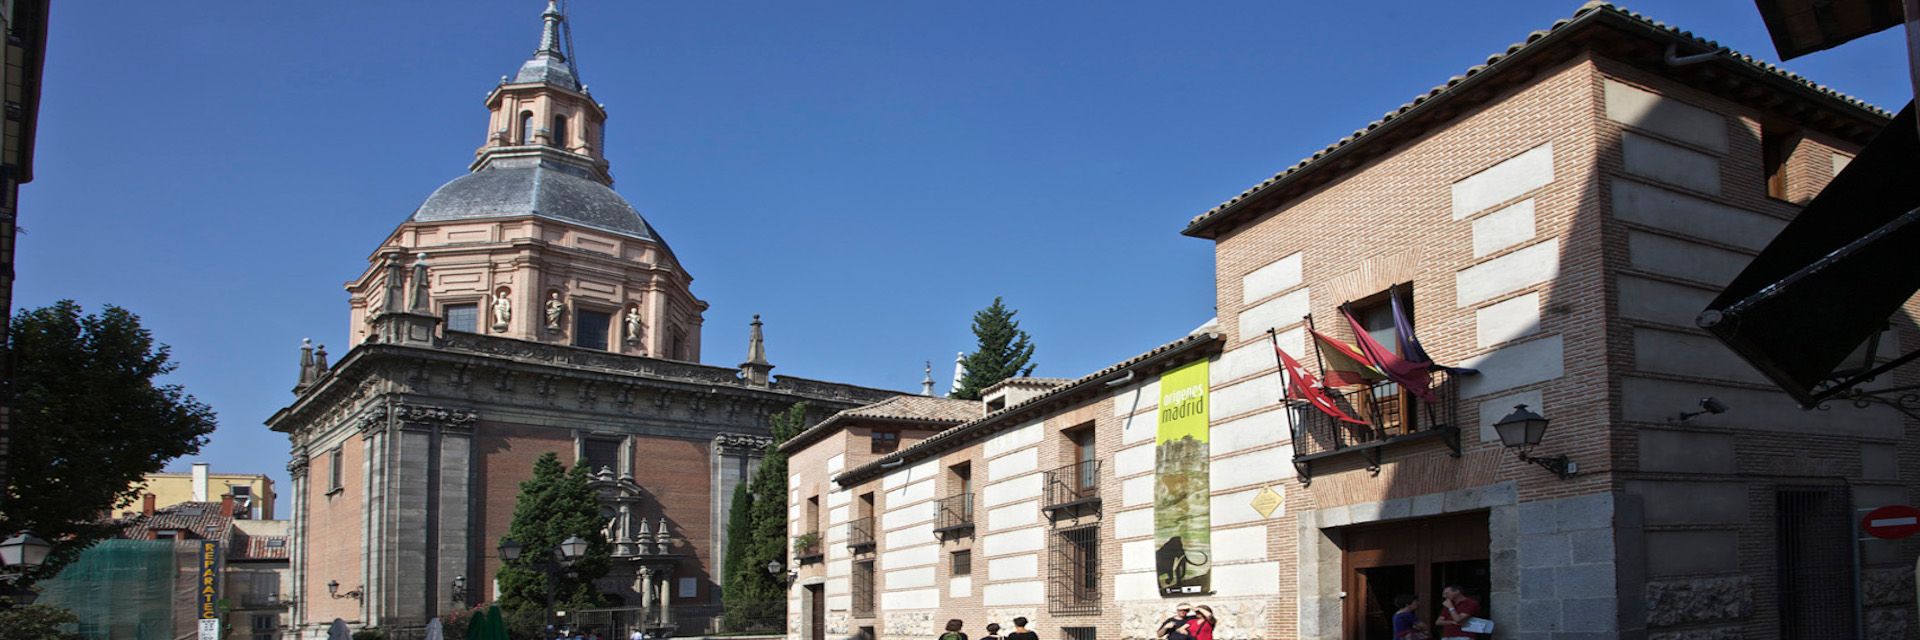 Museo di San Isidro. Le origini di Madrid